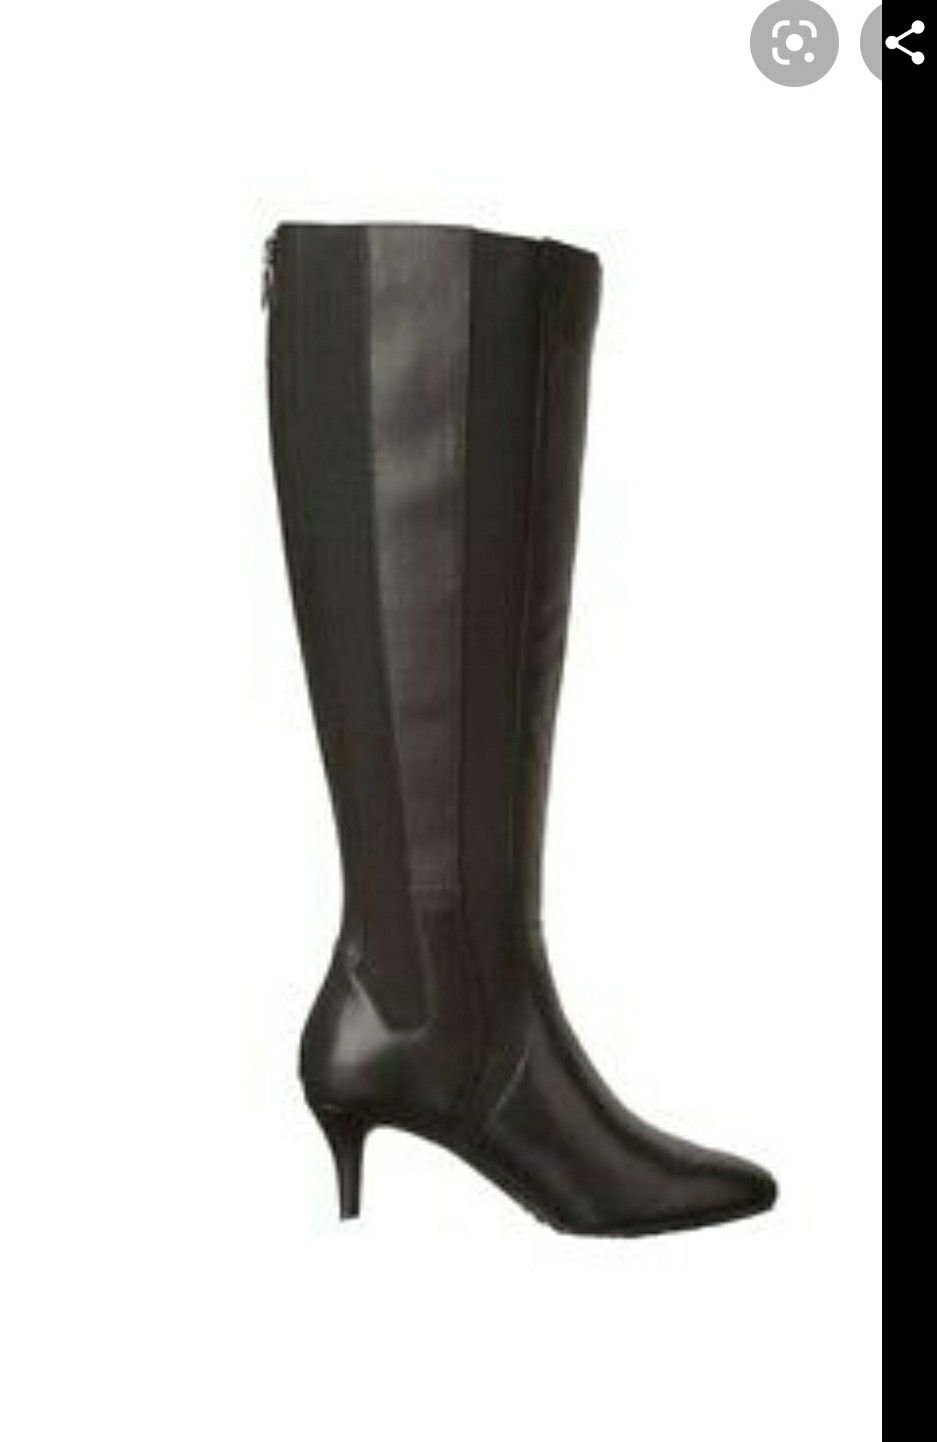 Tahari Fiore boots brand new size 6